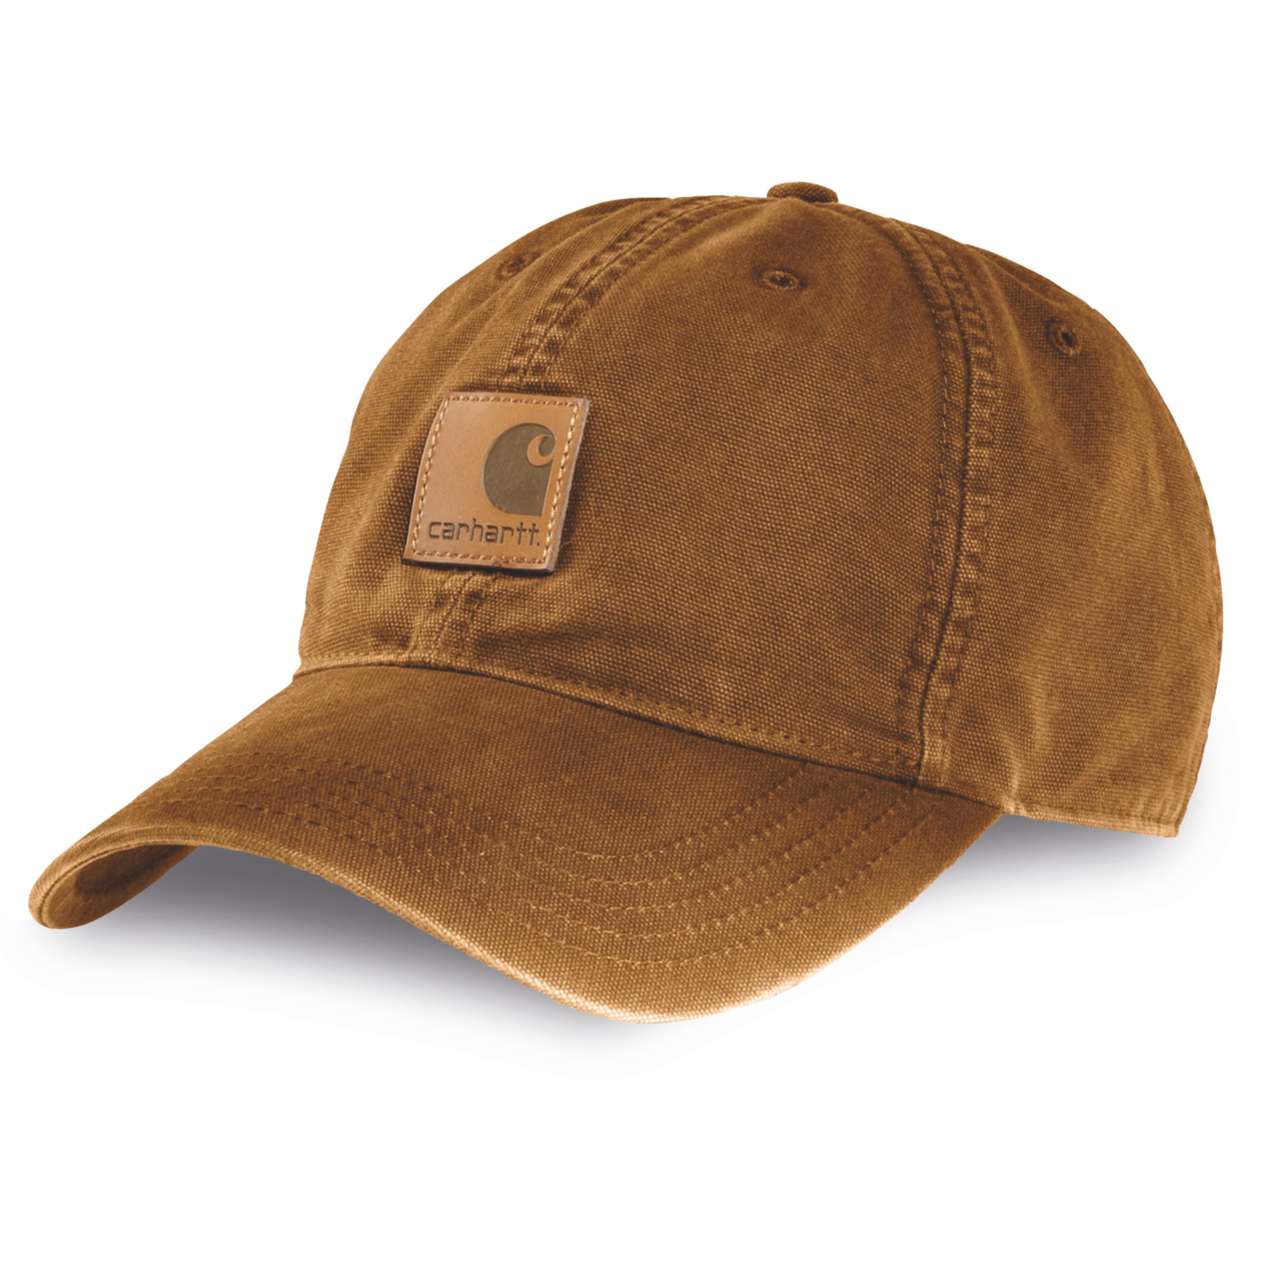 ODESSA CAP brown